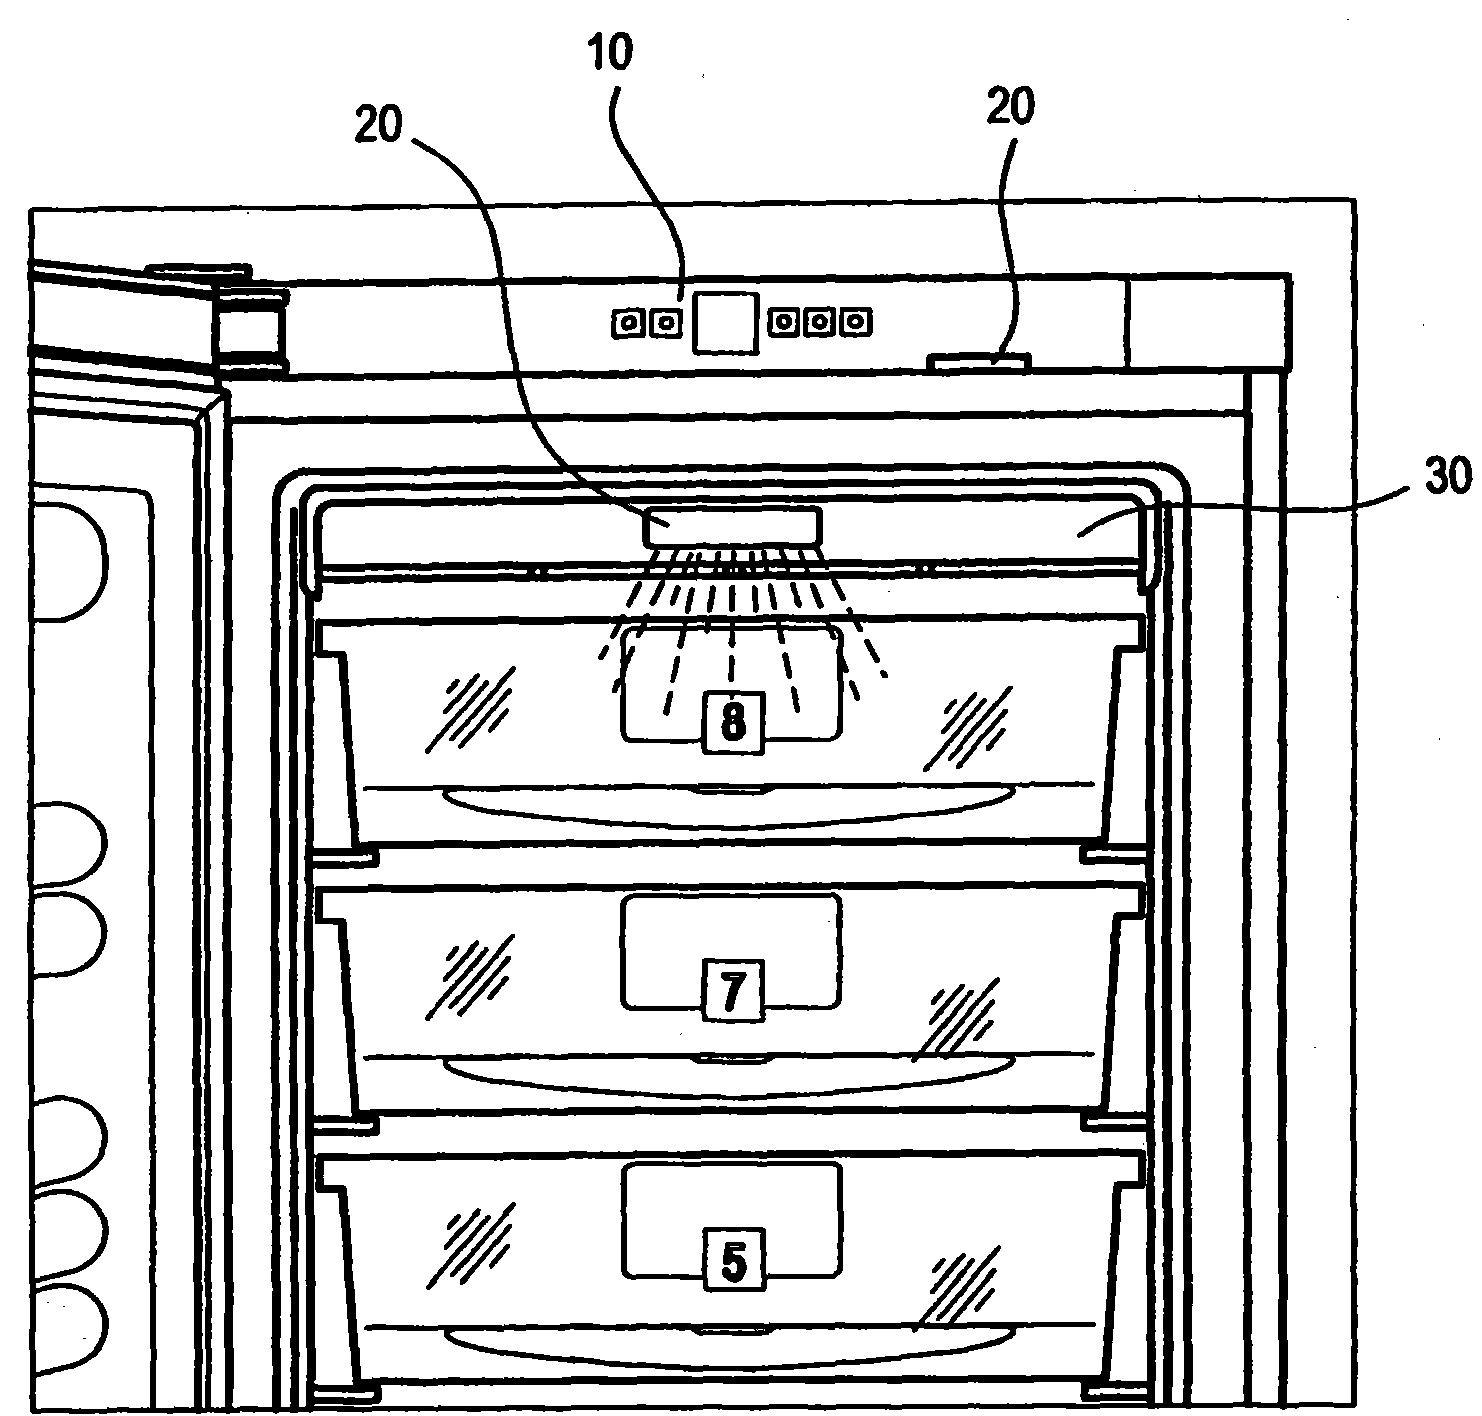 Refrigerator and/or freezer